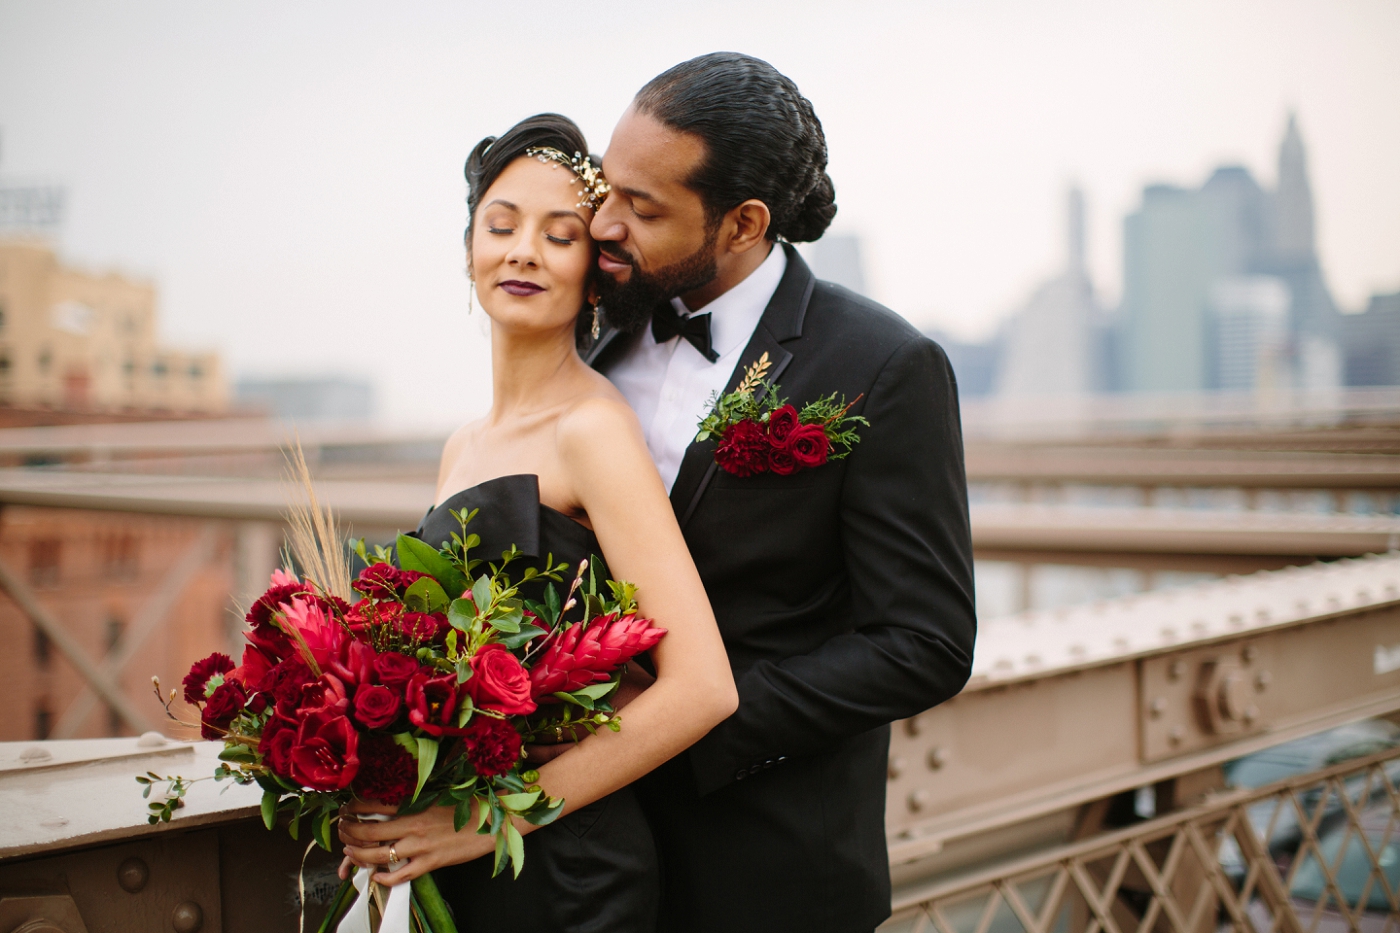 New York City wedding photography by Samantha Clarke Photography